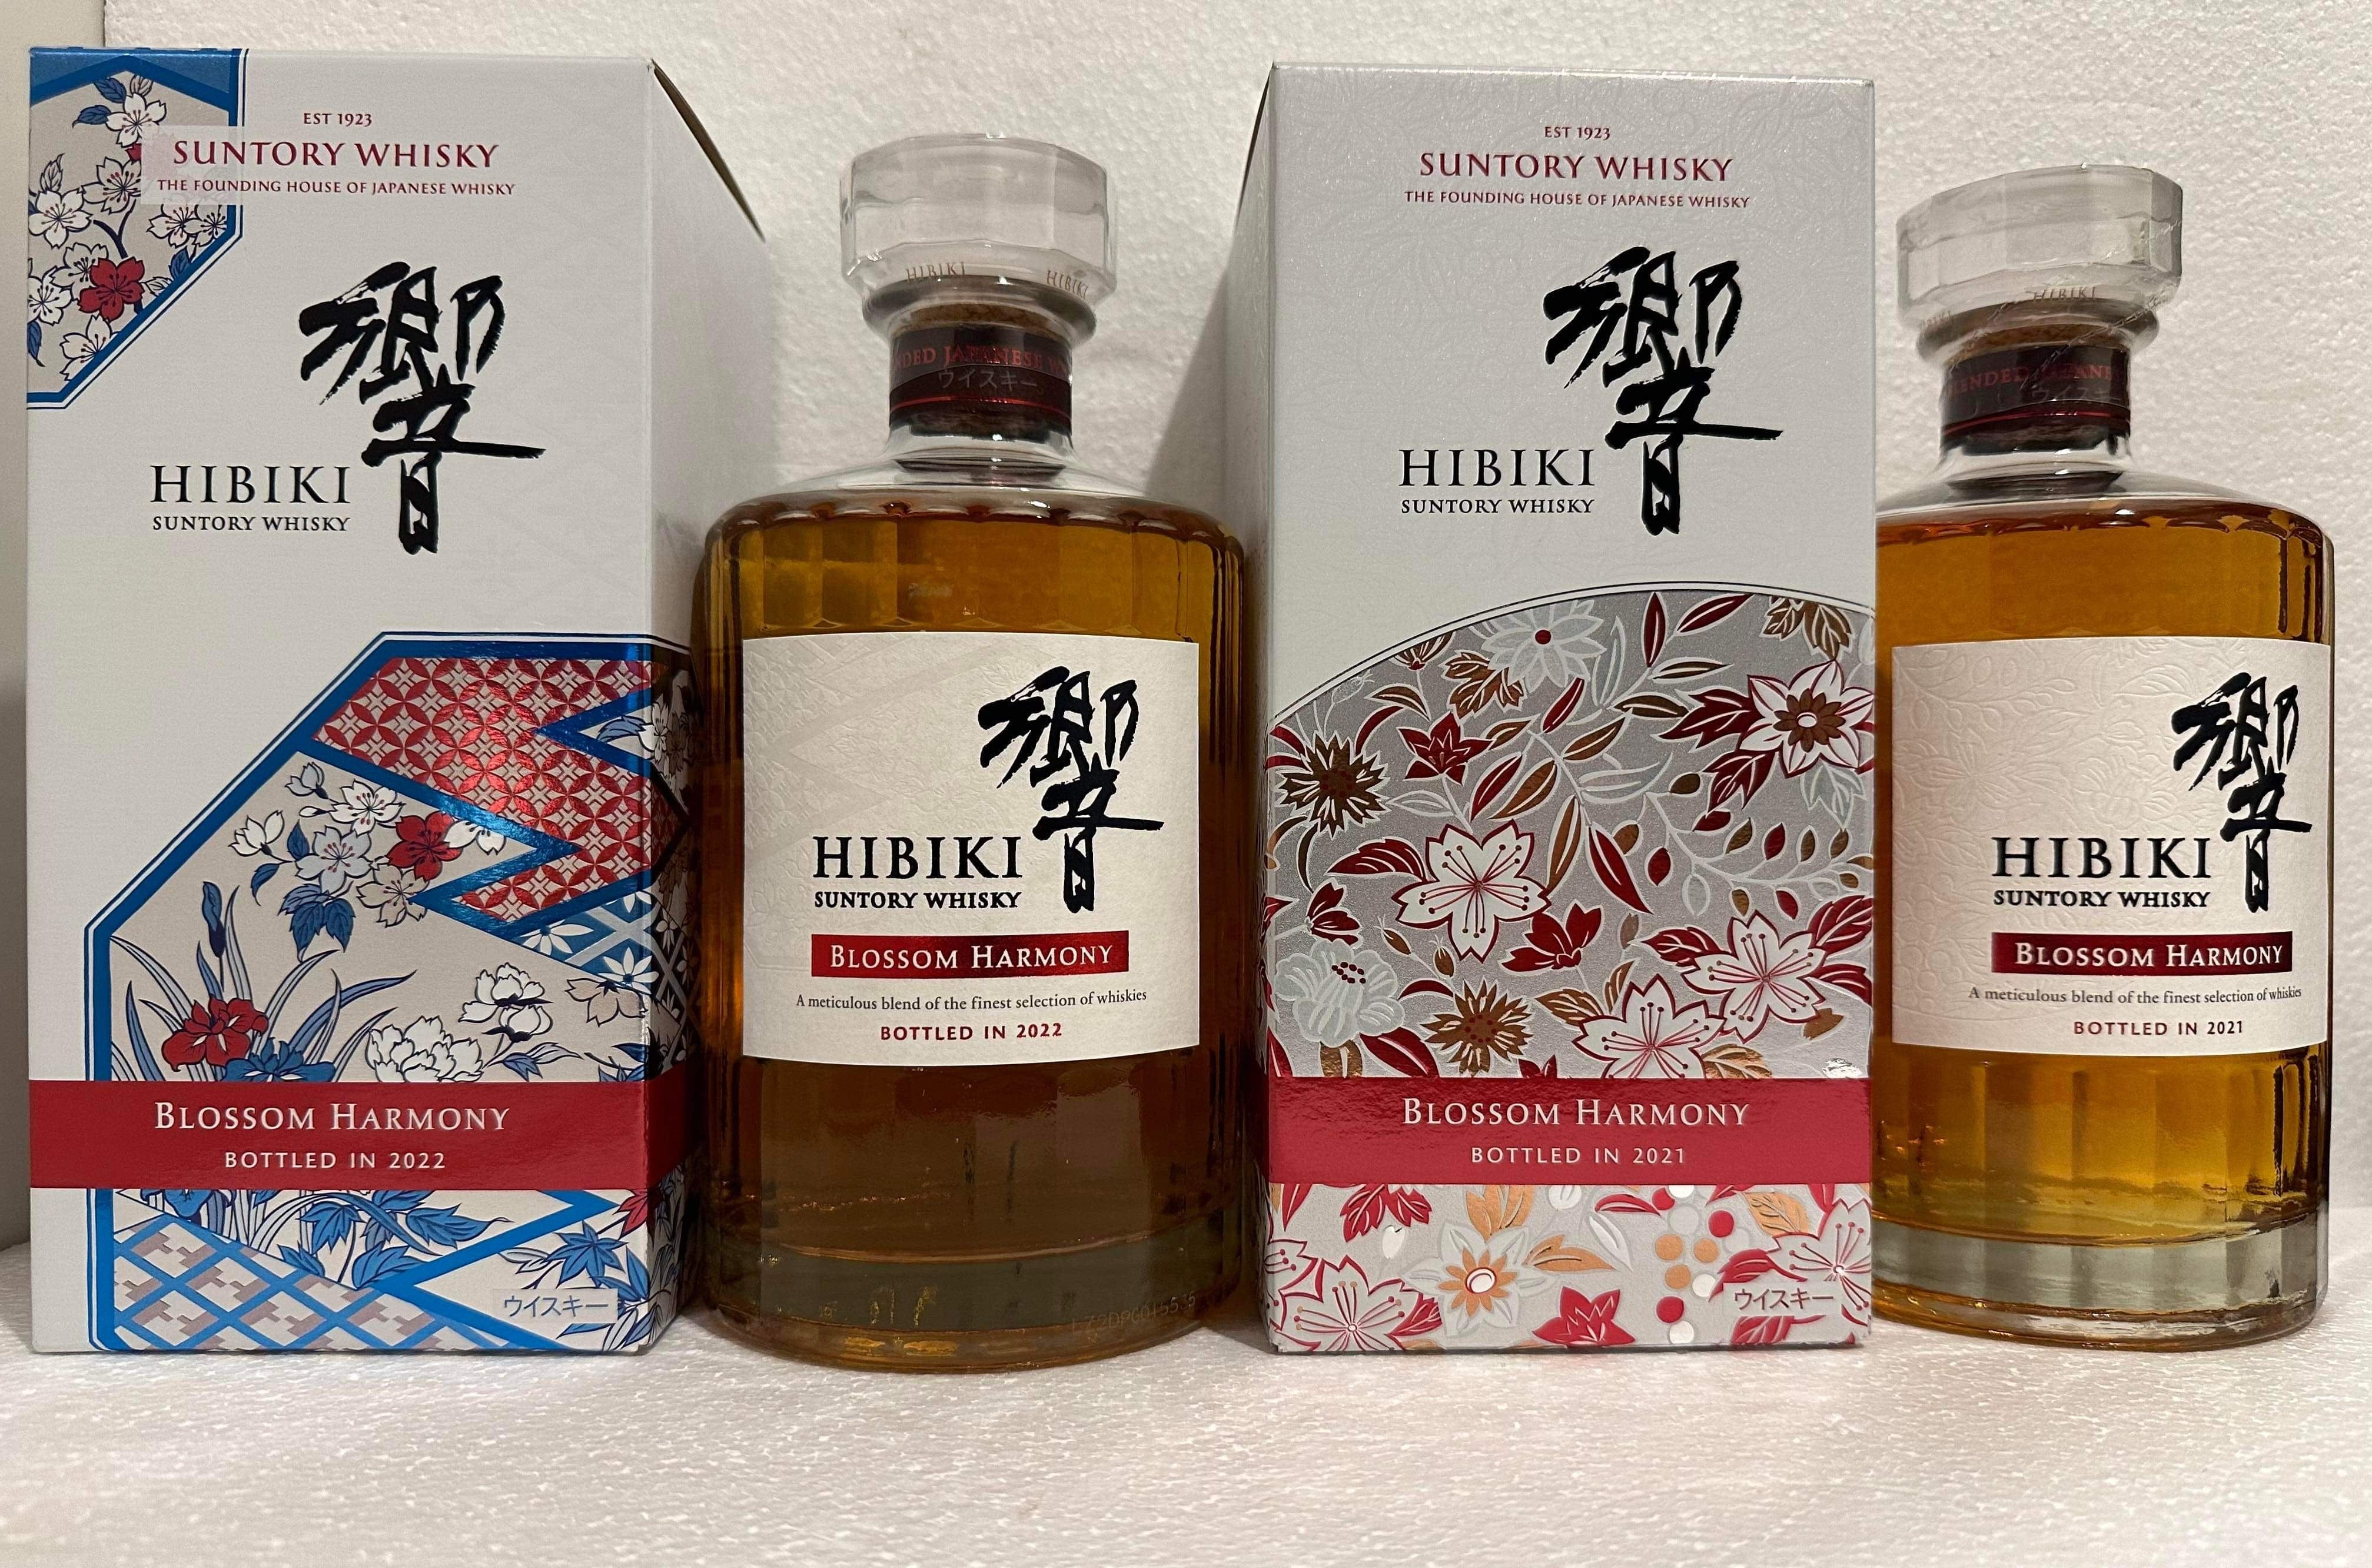 Suntory Hibiki Blossom Harmony 2021 & 2022 (Both bottles)